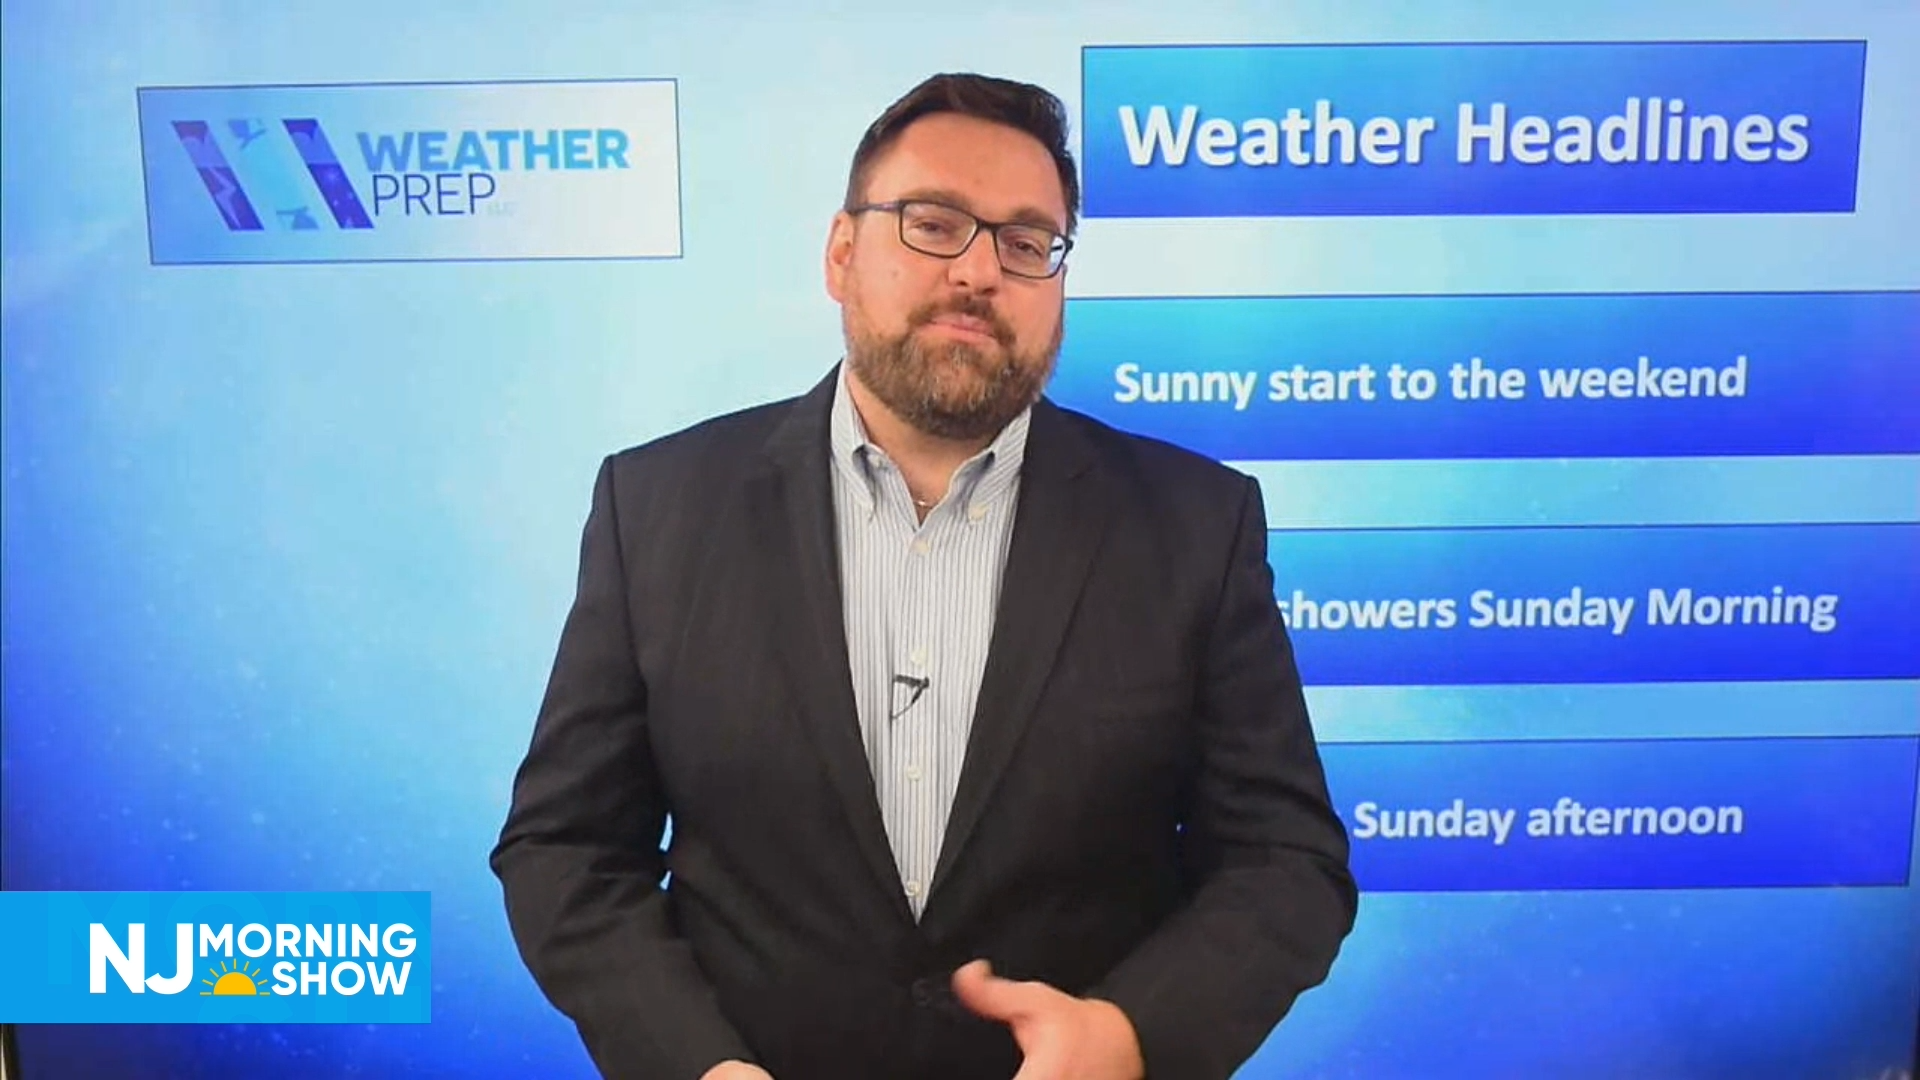 NJ Morning Show – Weather Headlines